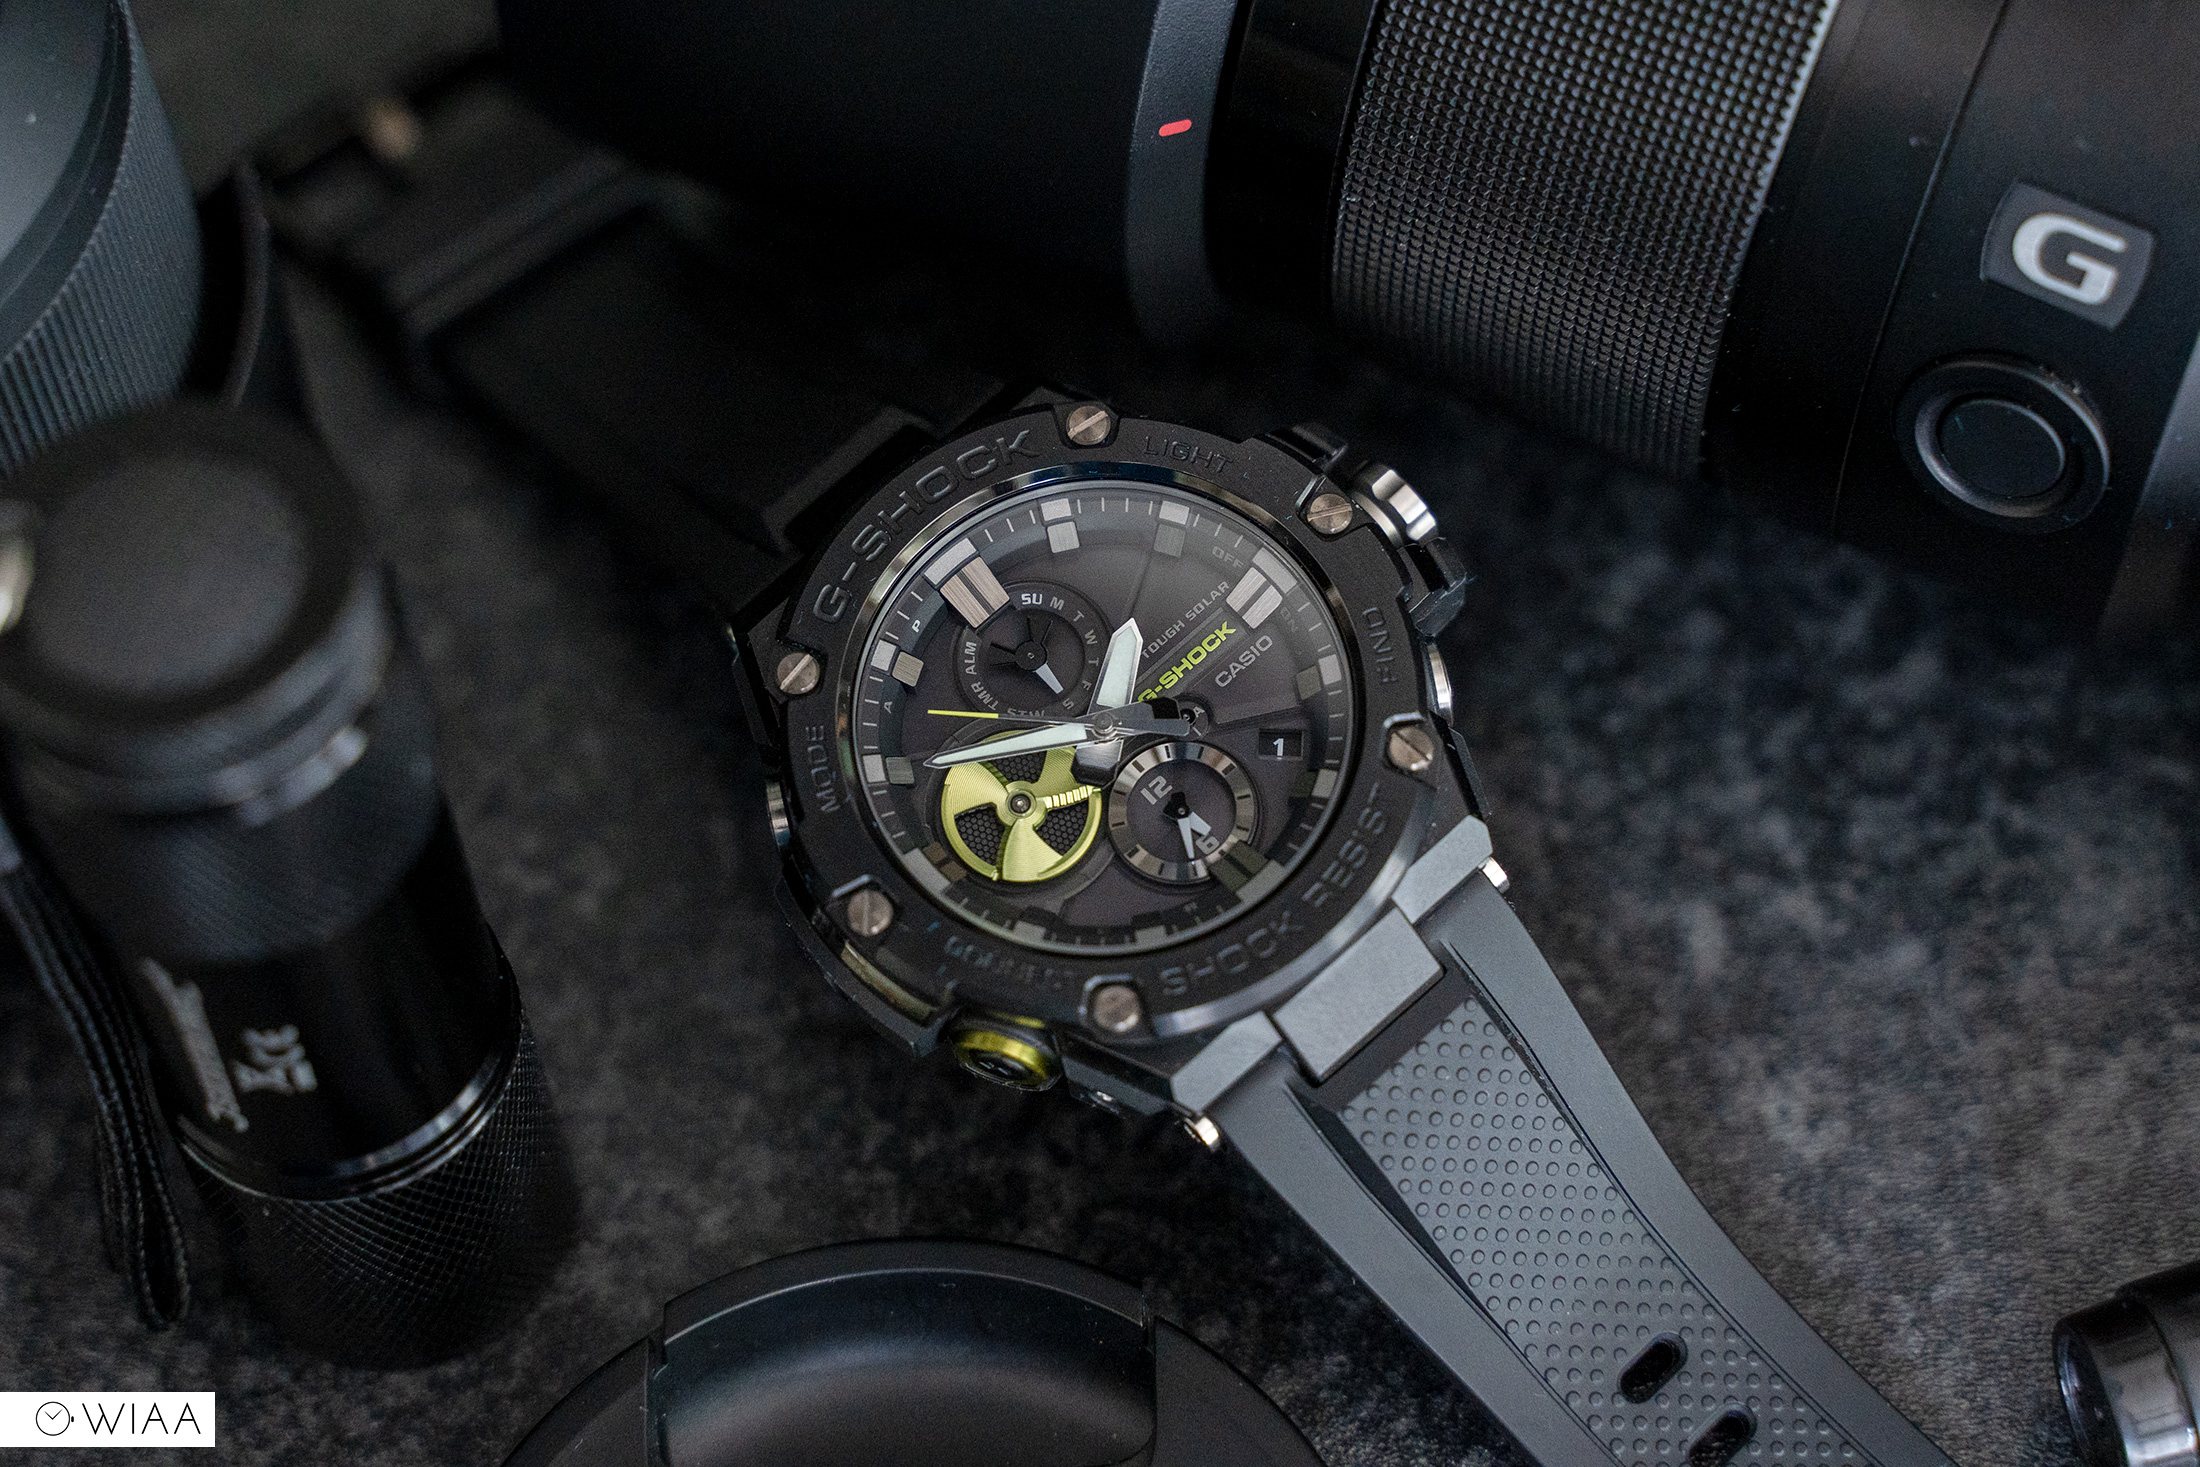 G-Shock G-Steel GST-B100 Watch Review - 12&60